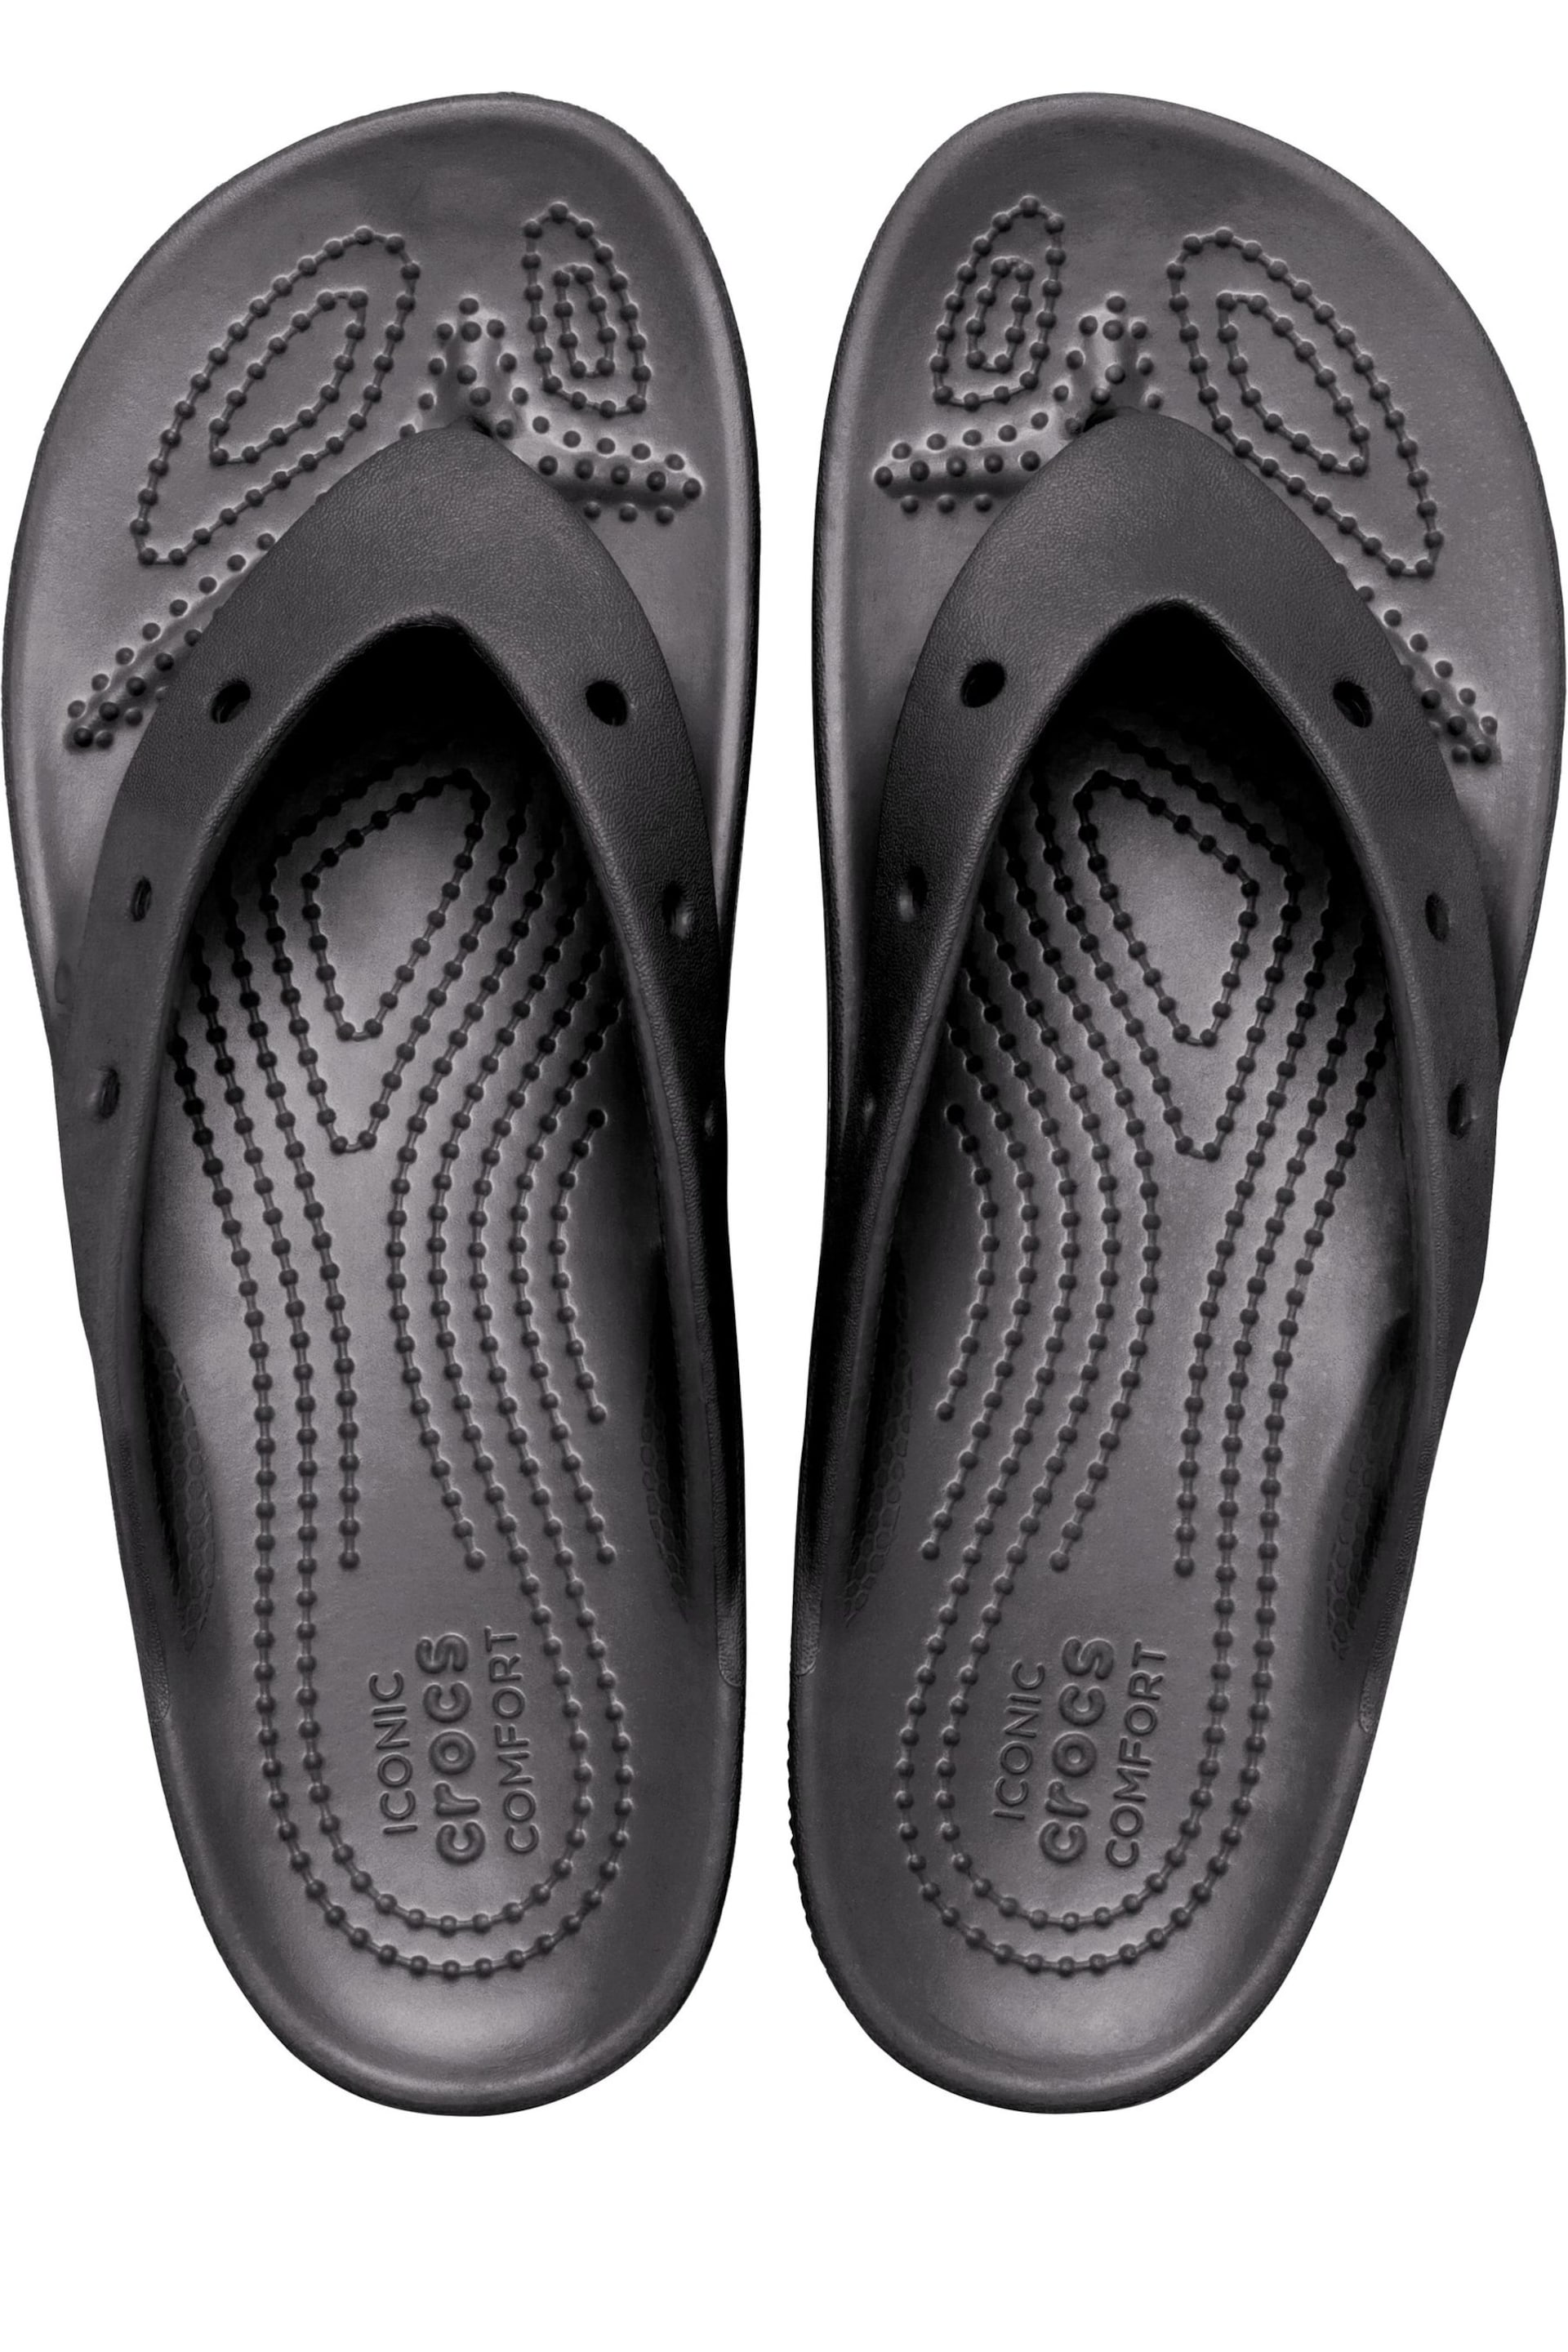 Crocs Classic Platform Flip Flops - Image 5 of 5